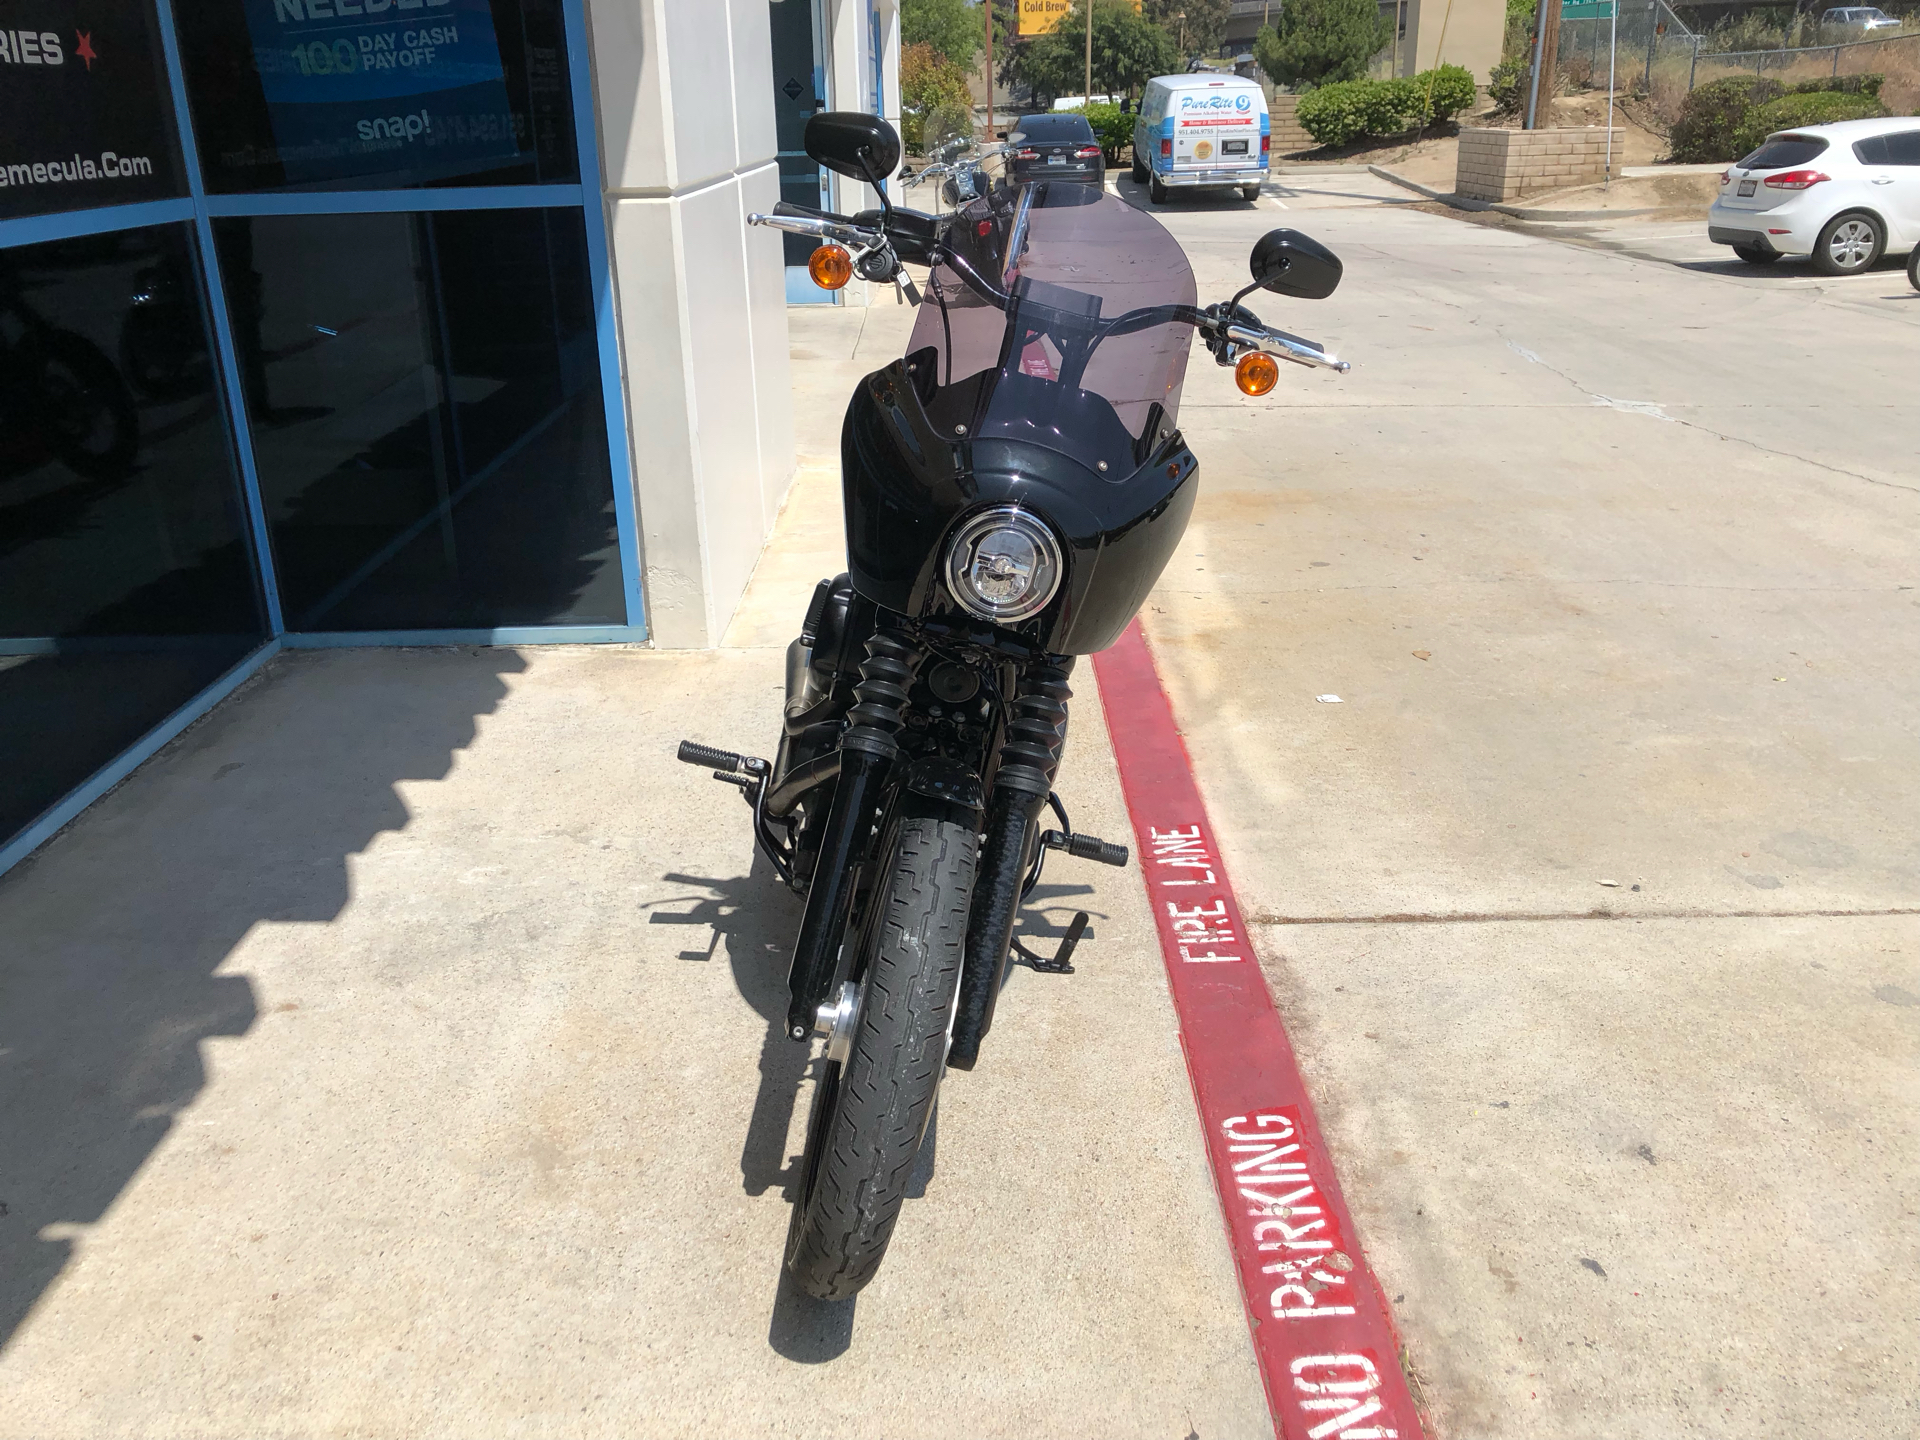 2018 Harley-Davidson Street Bob® 107 in Temecula, California - Photo 14